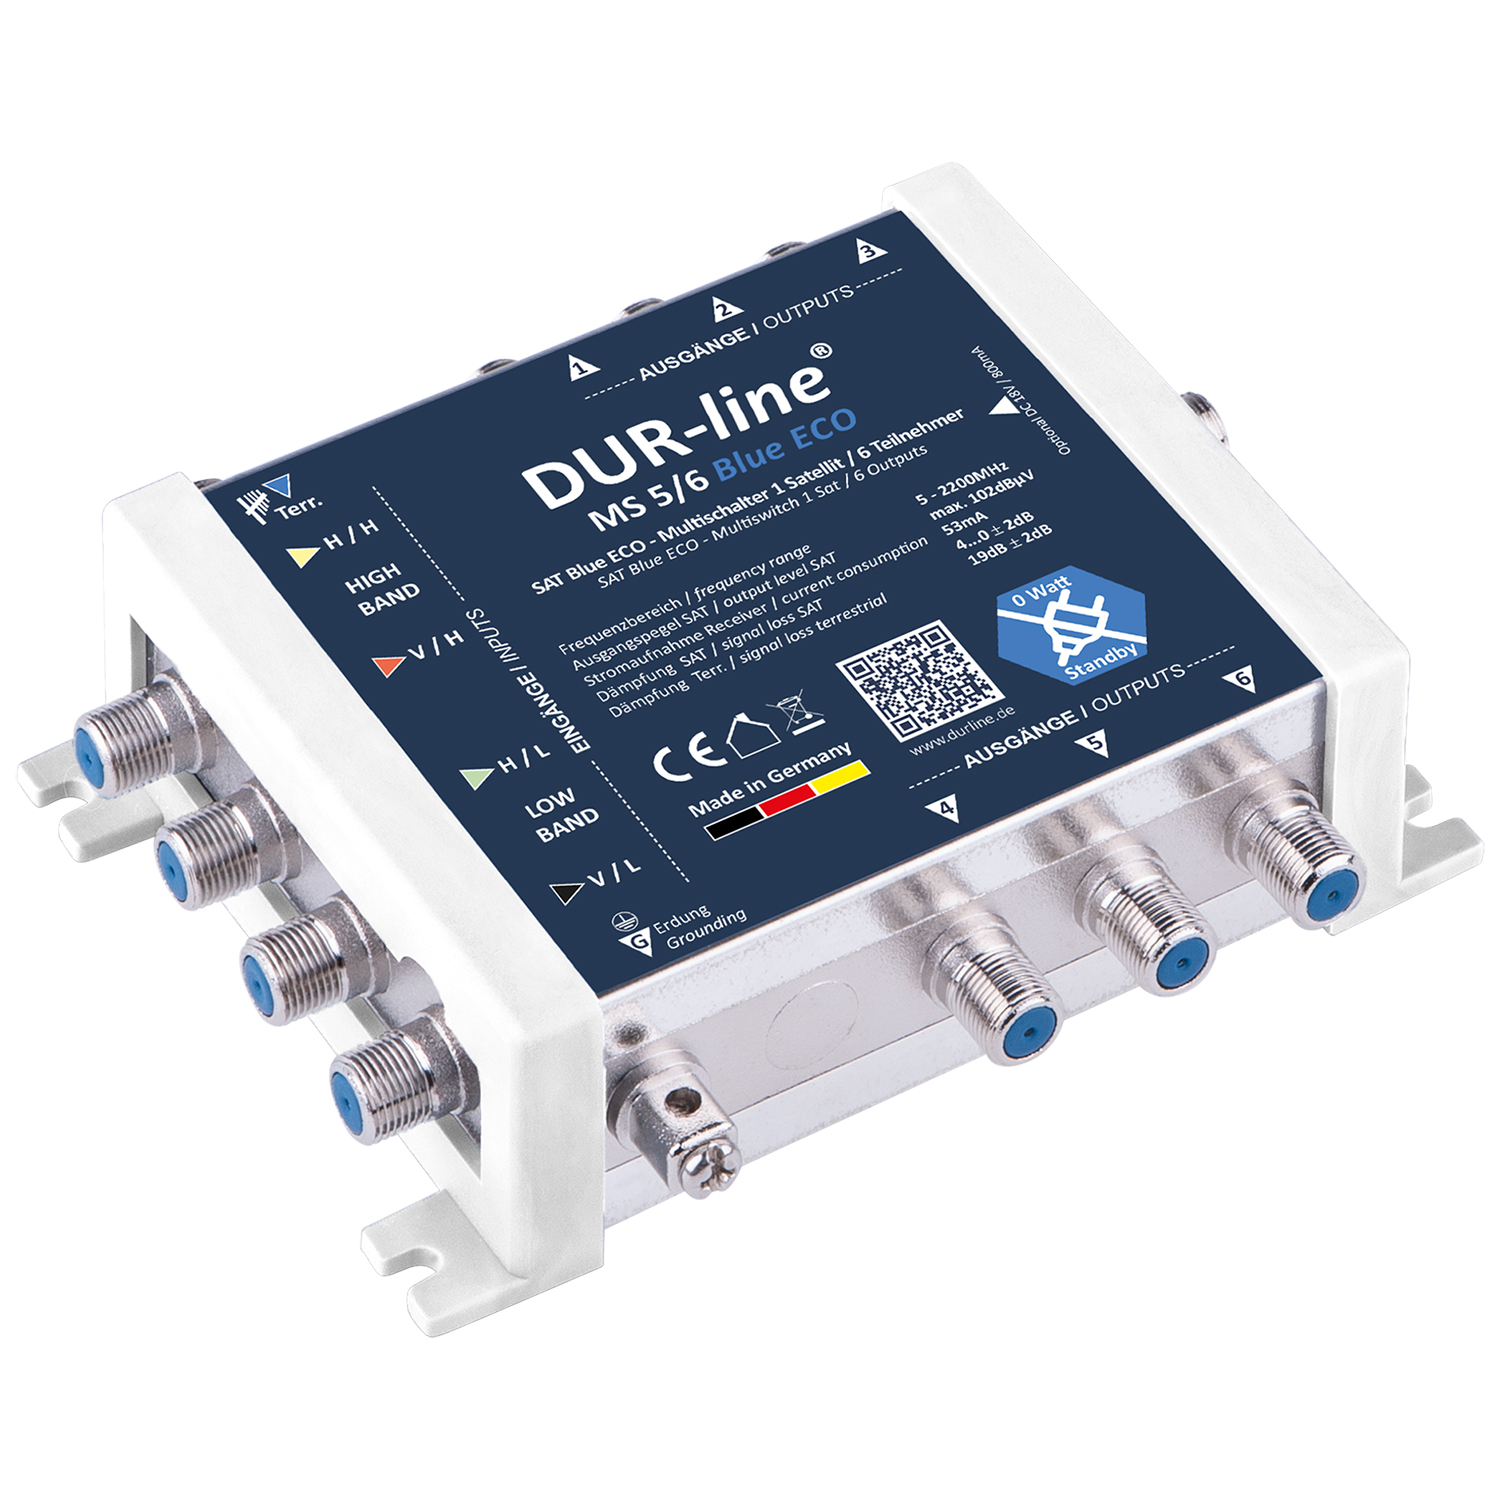 DUR-line MS 5/6 Blue ECO - Multischalter